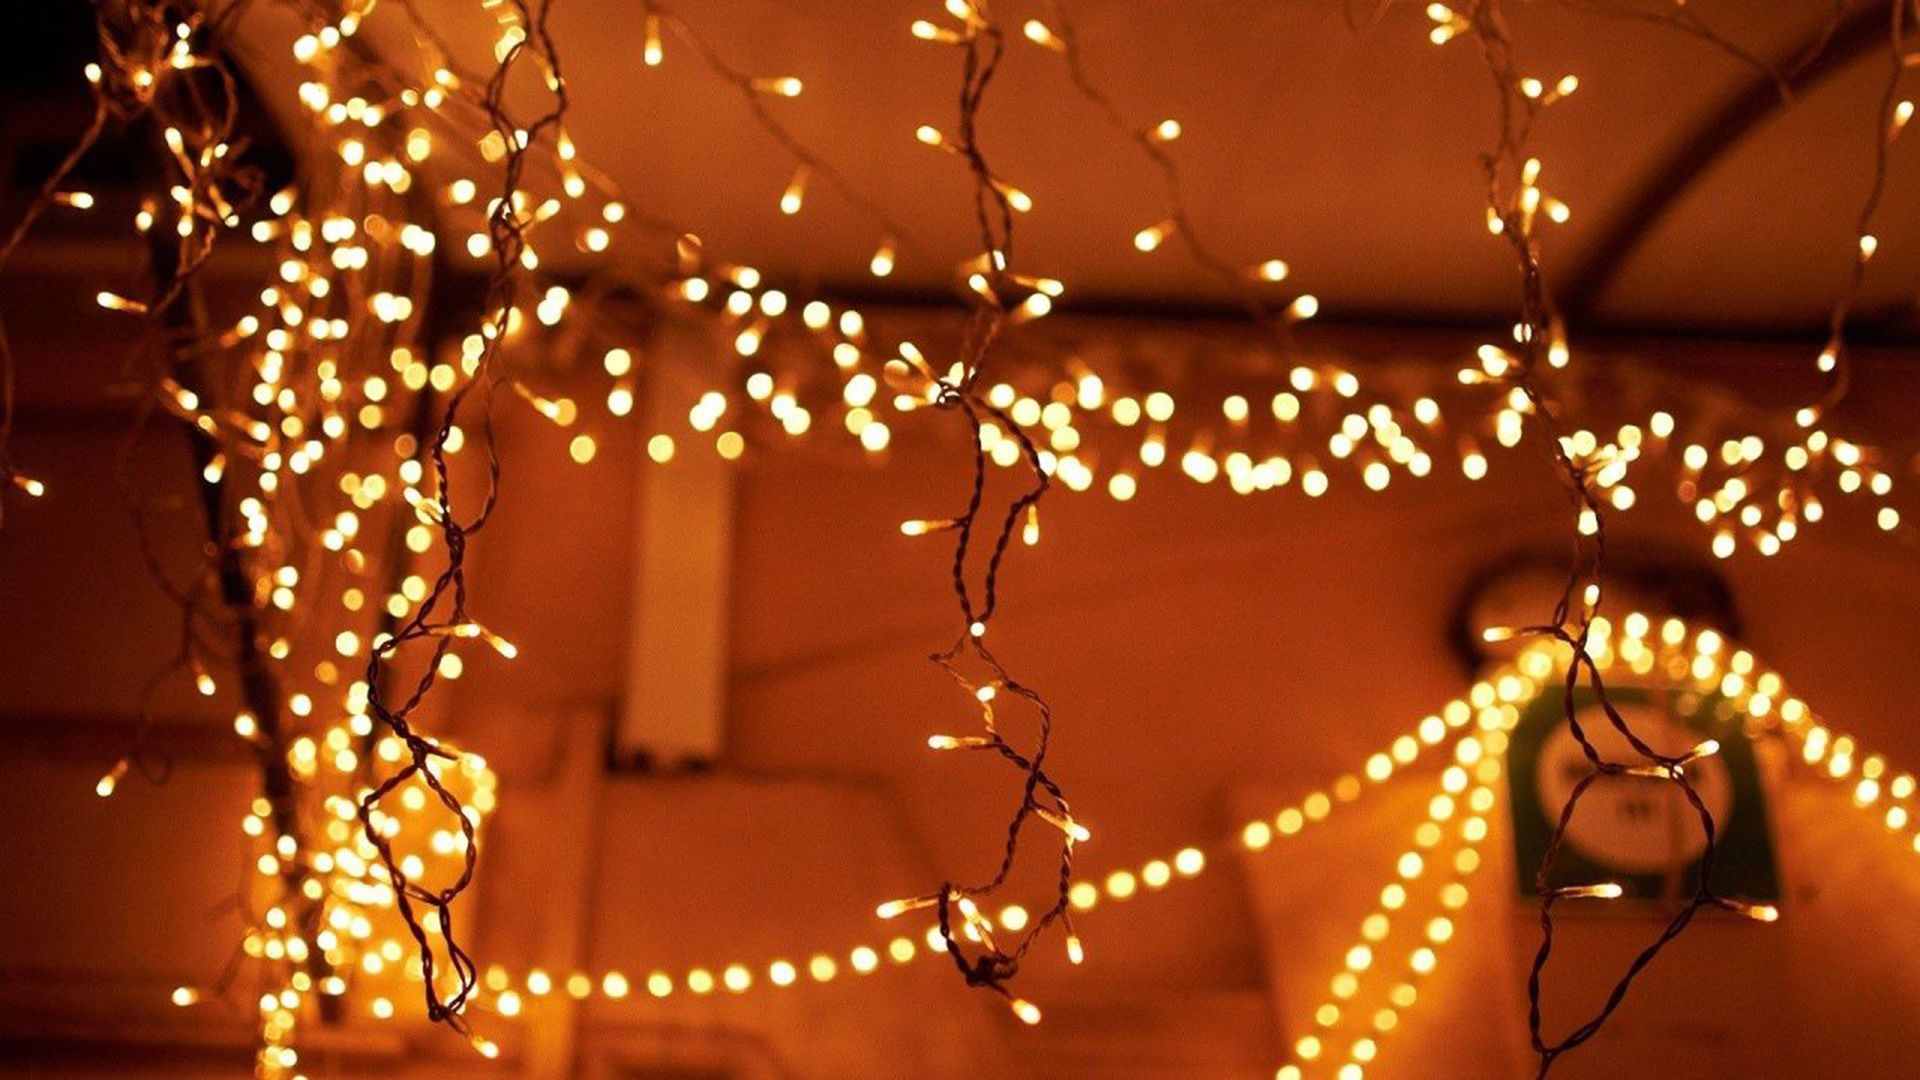 Aesthetic Christmas Lights Wallpaper HD for PC Free Download - Christmas lights, fairy lights